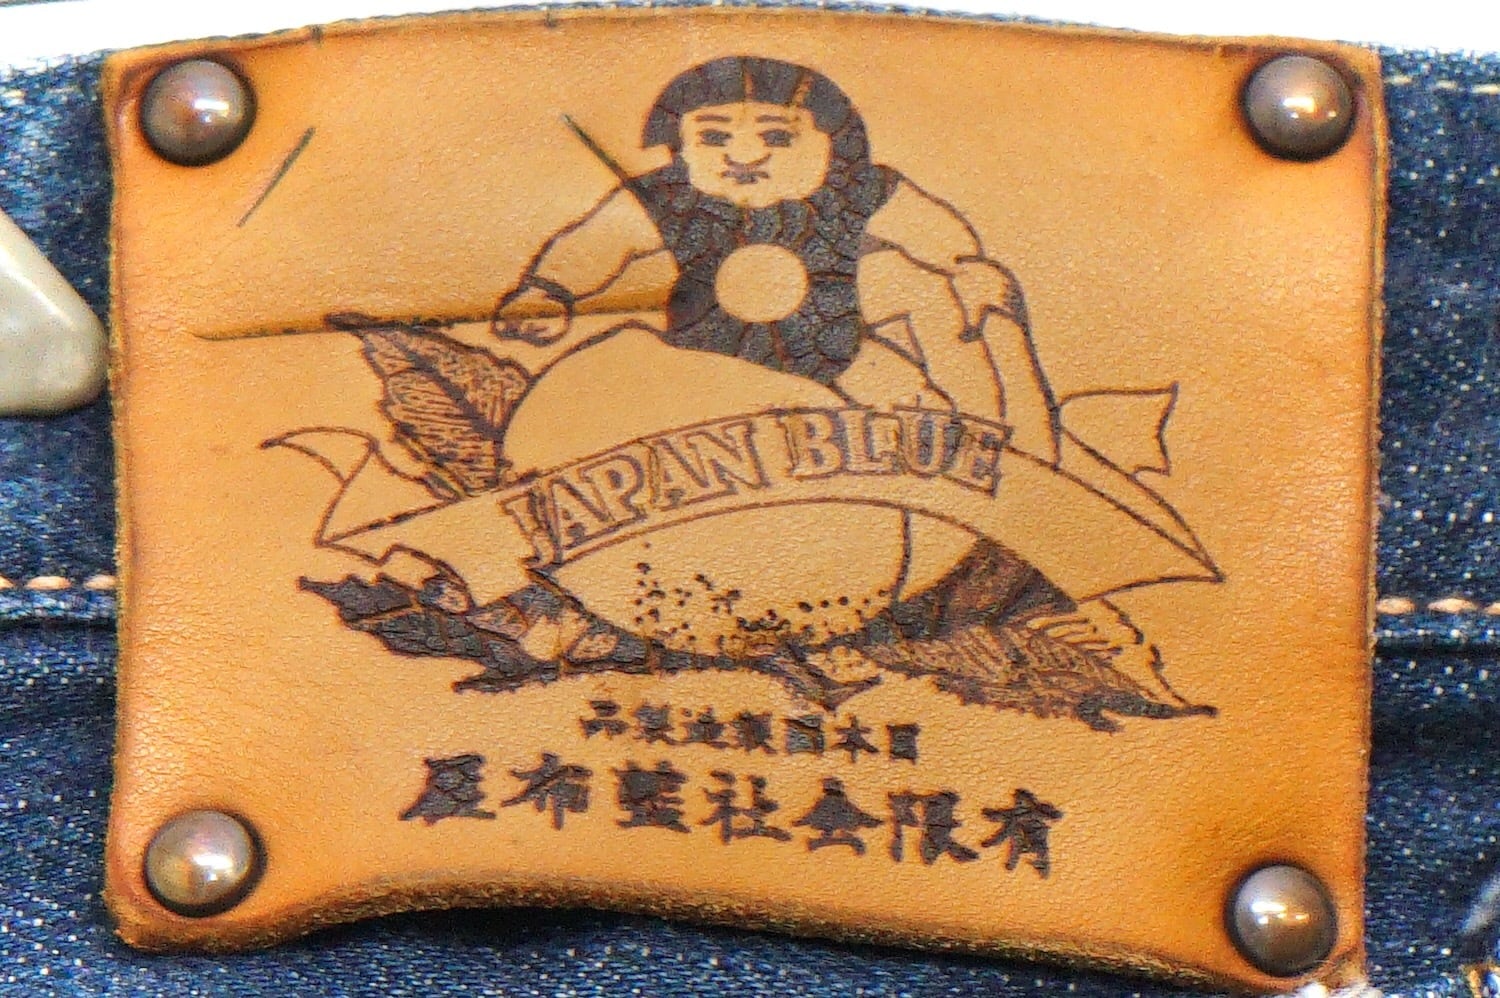 JAPAN BLUE 有限会社藍布屋ジーンズ